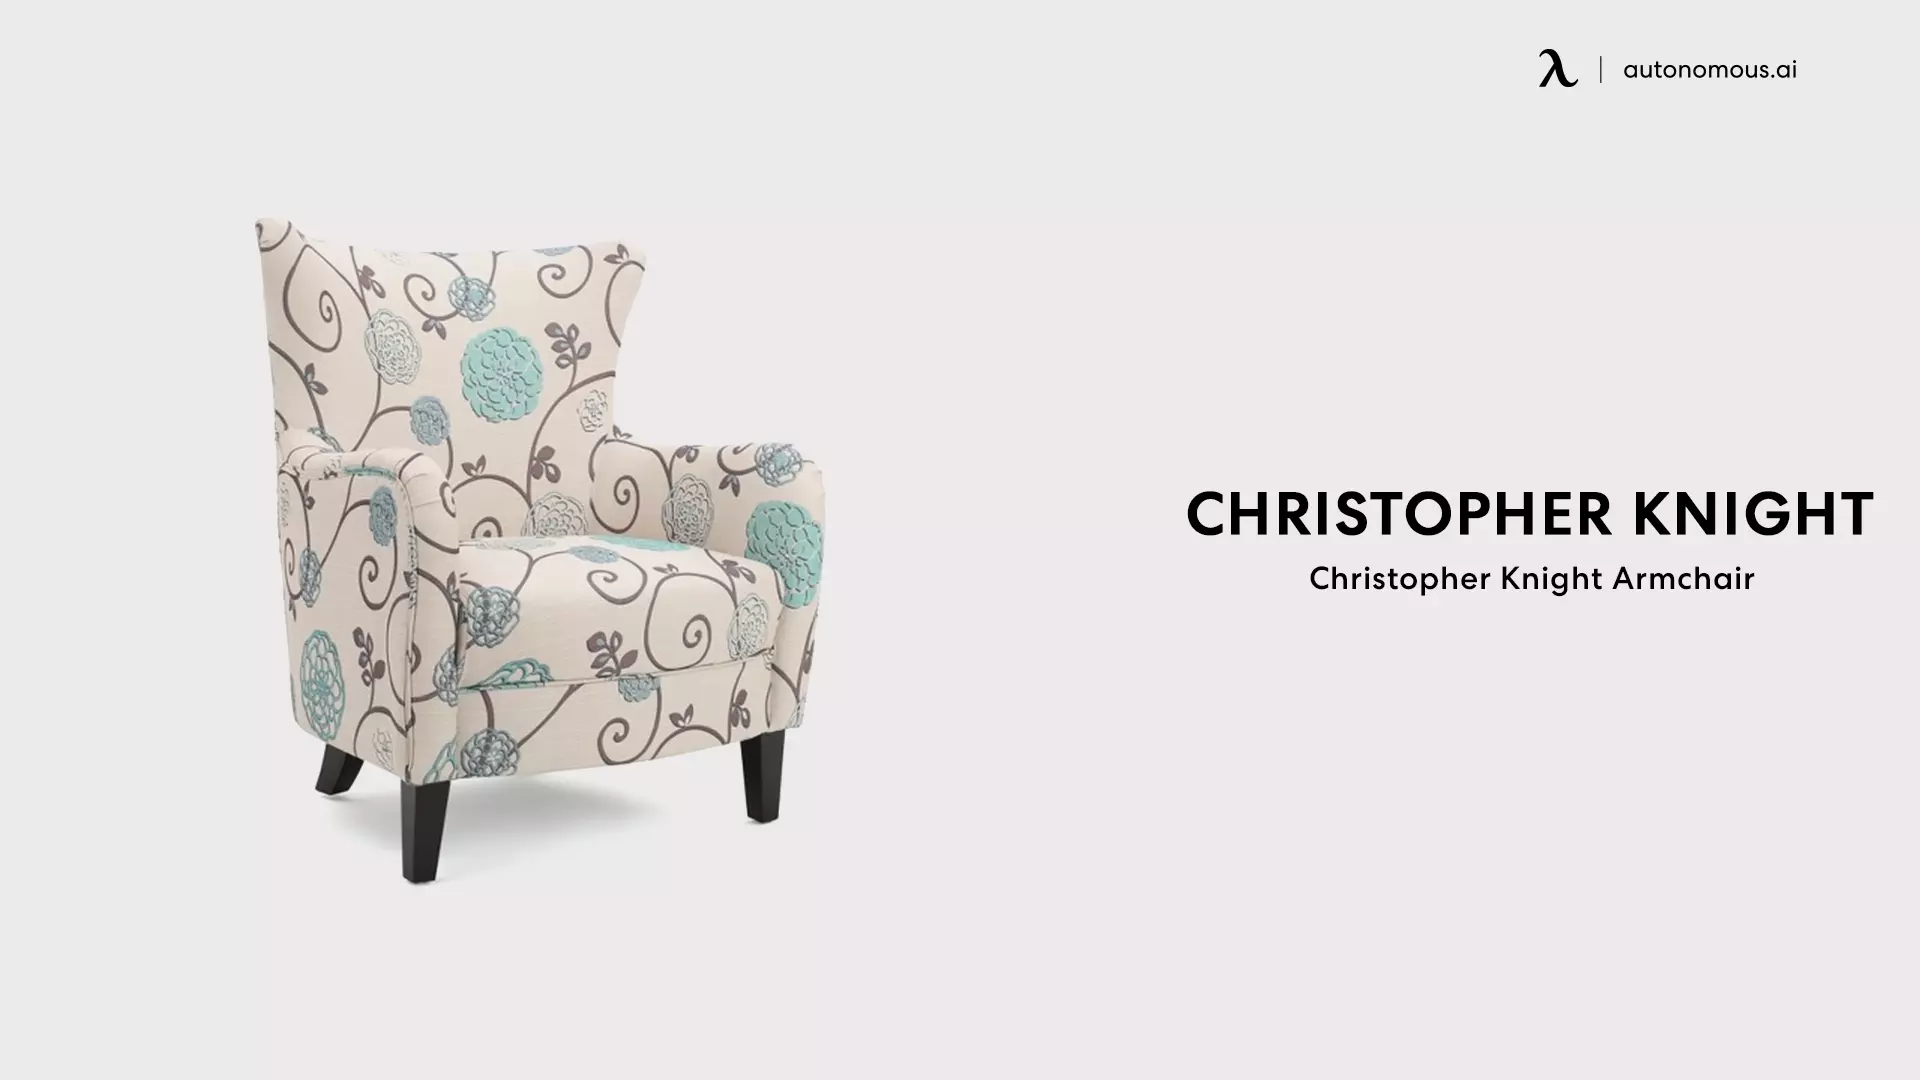 Christopher Knight Armchair